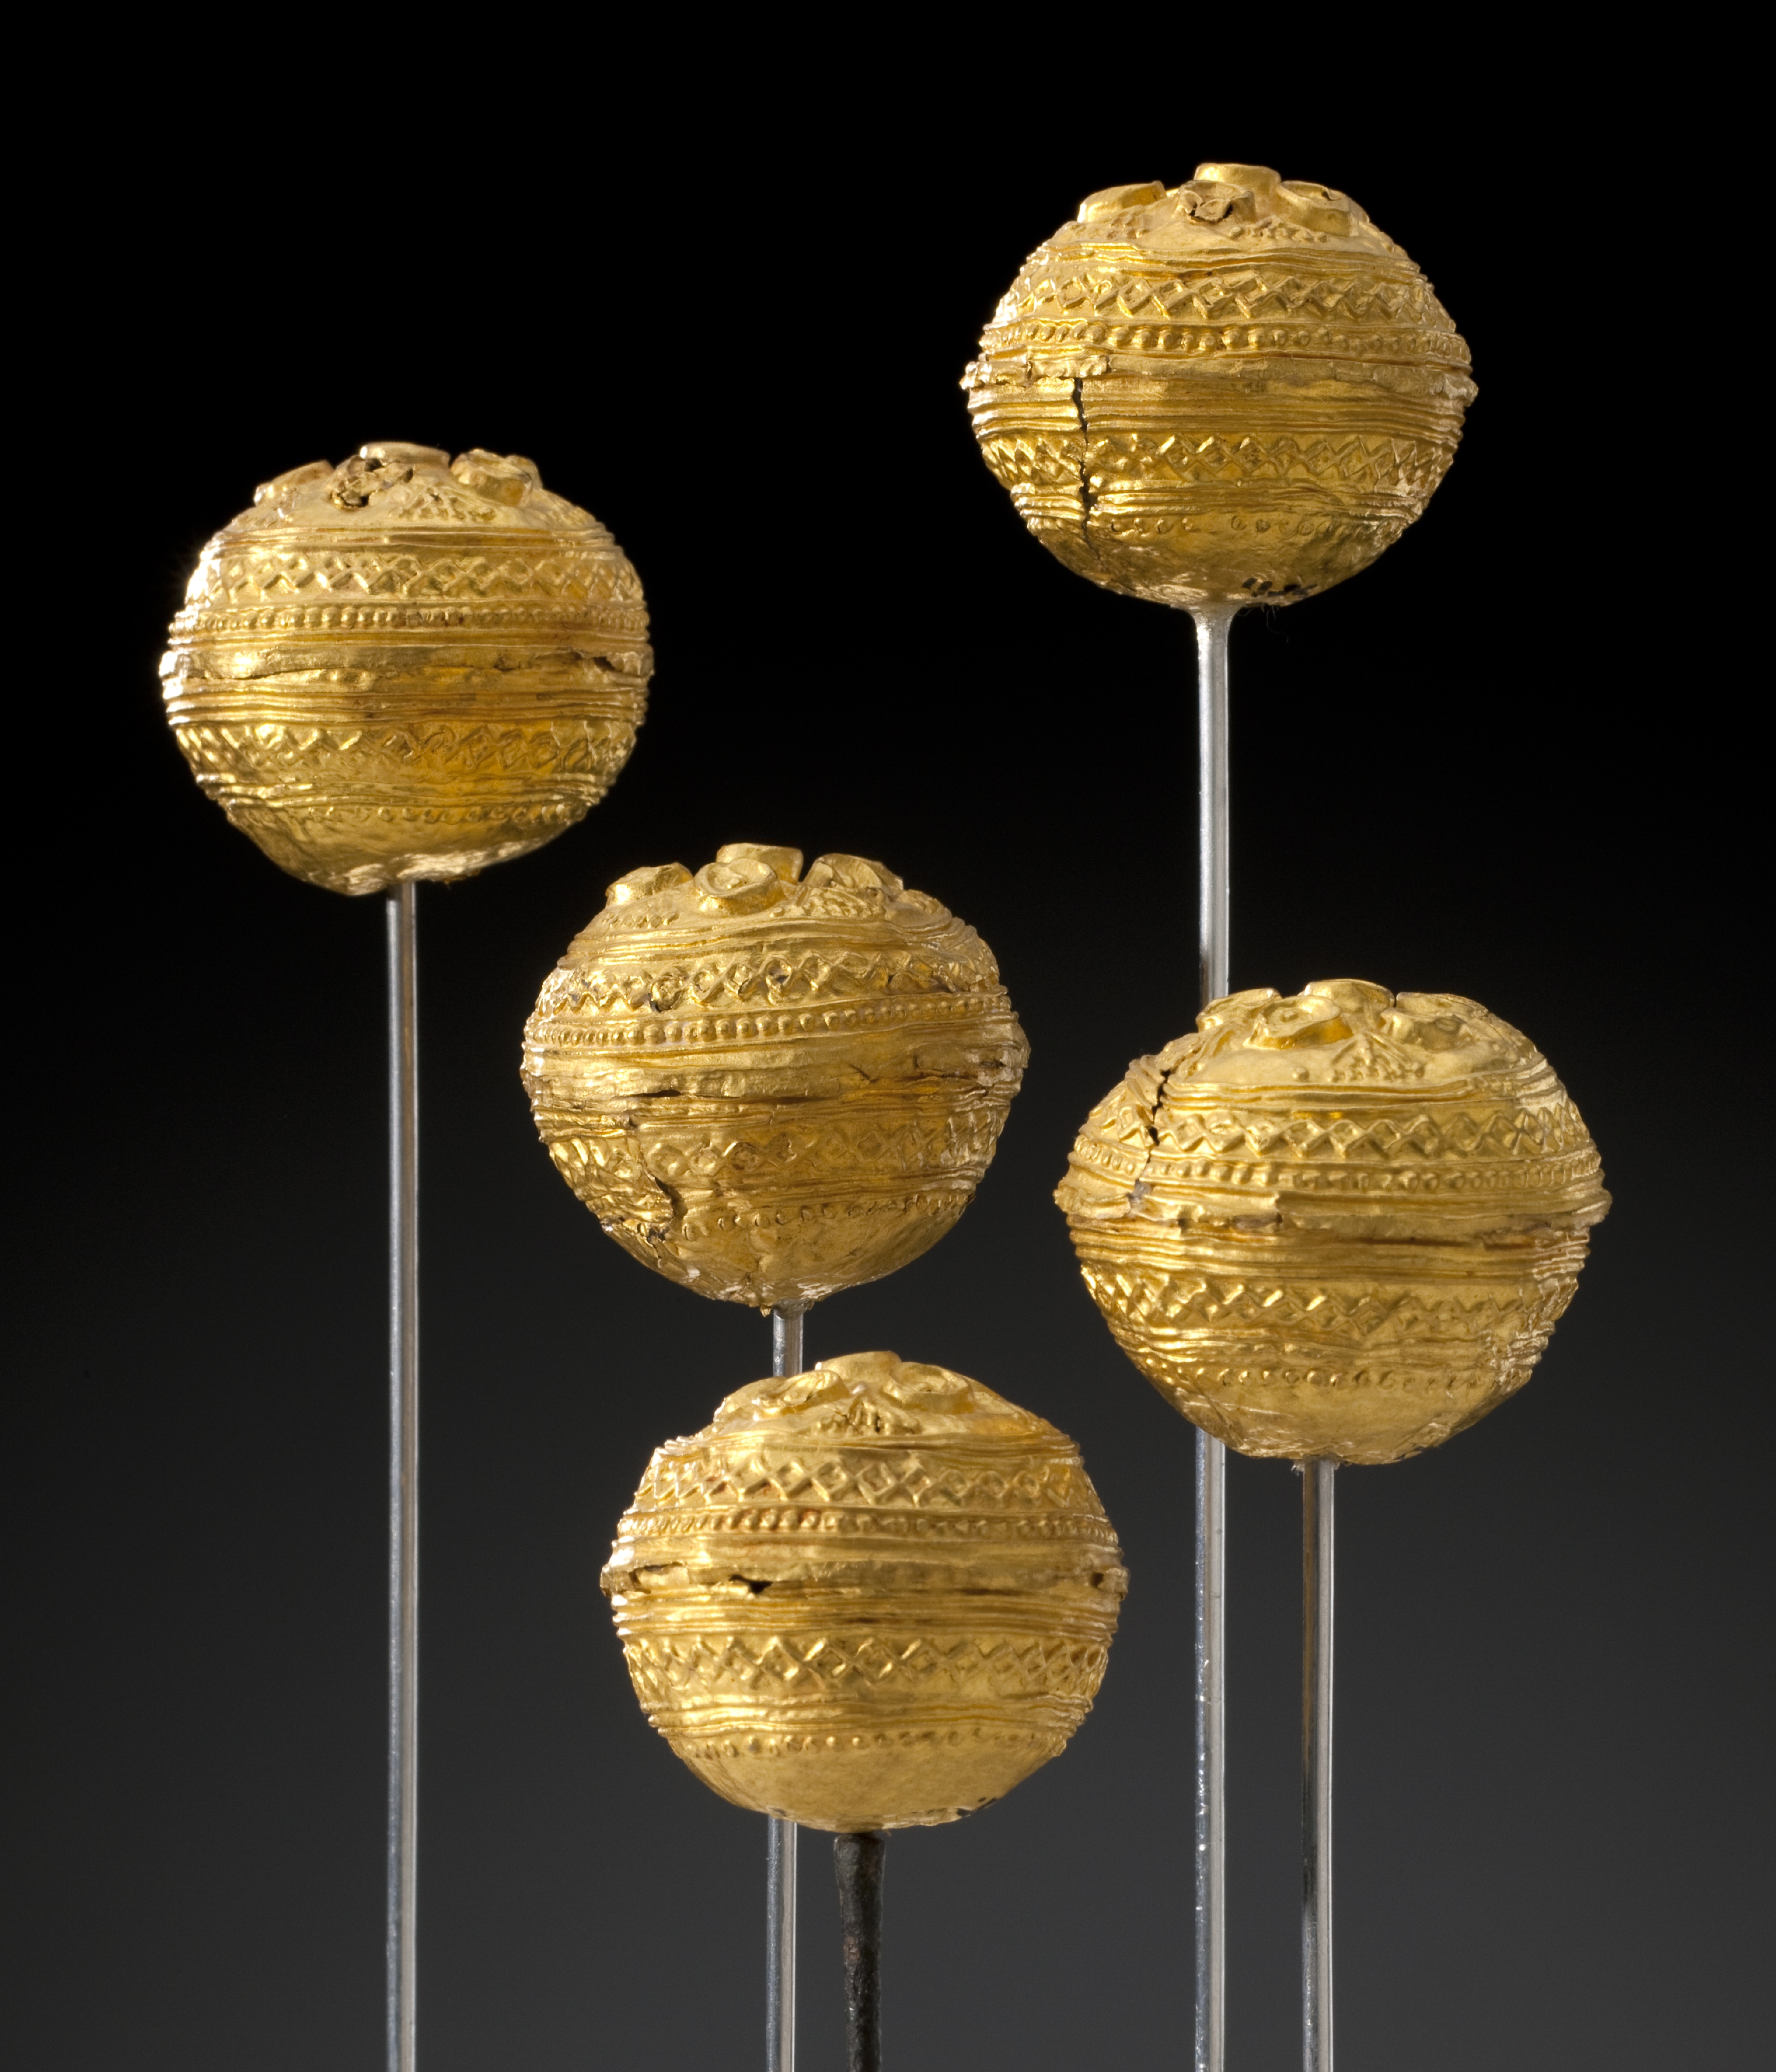 5 Nadeln mit großen goldenen Kugeln aus Goldblech. Die Kugeln sind reich verziert mit Ornamenten